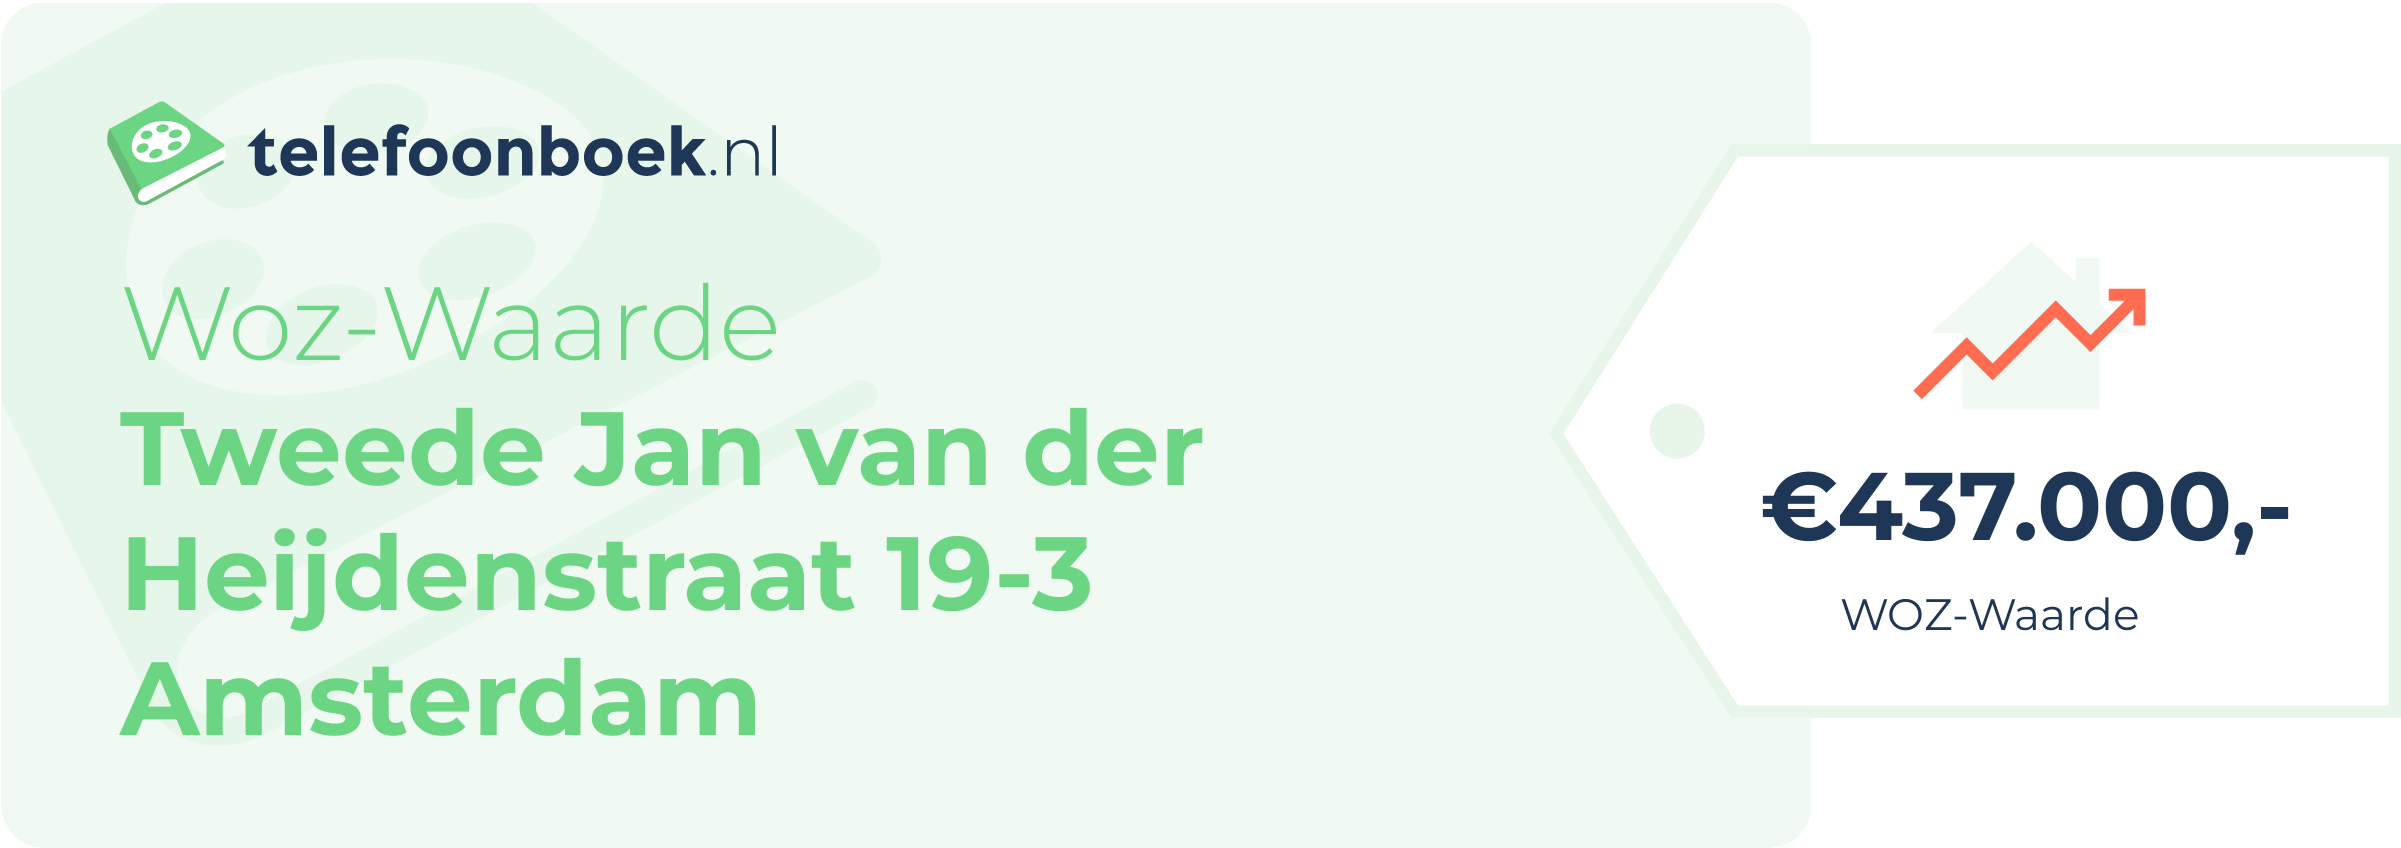 WOZ-waarde Tweede Jan Van Der Heijdenstraat 19-3 Amsterdam